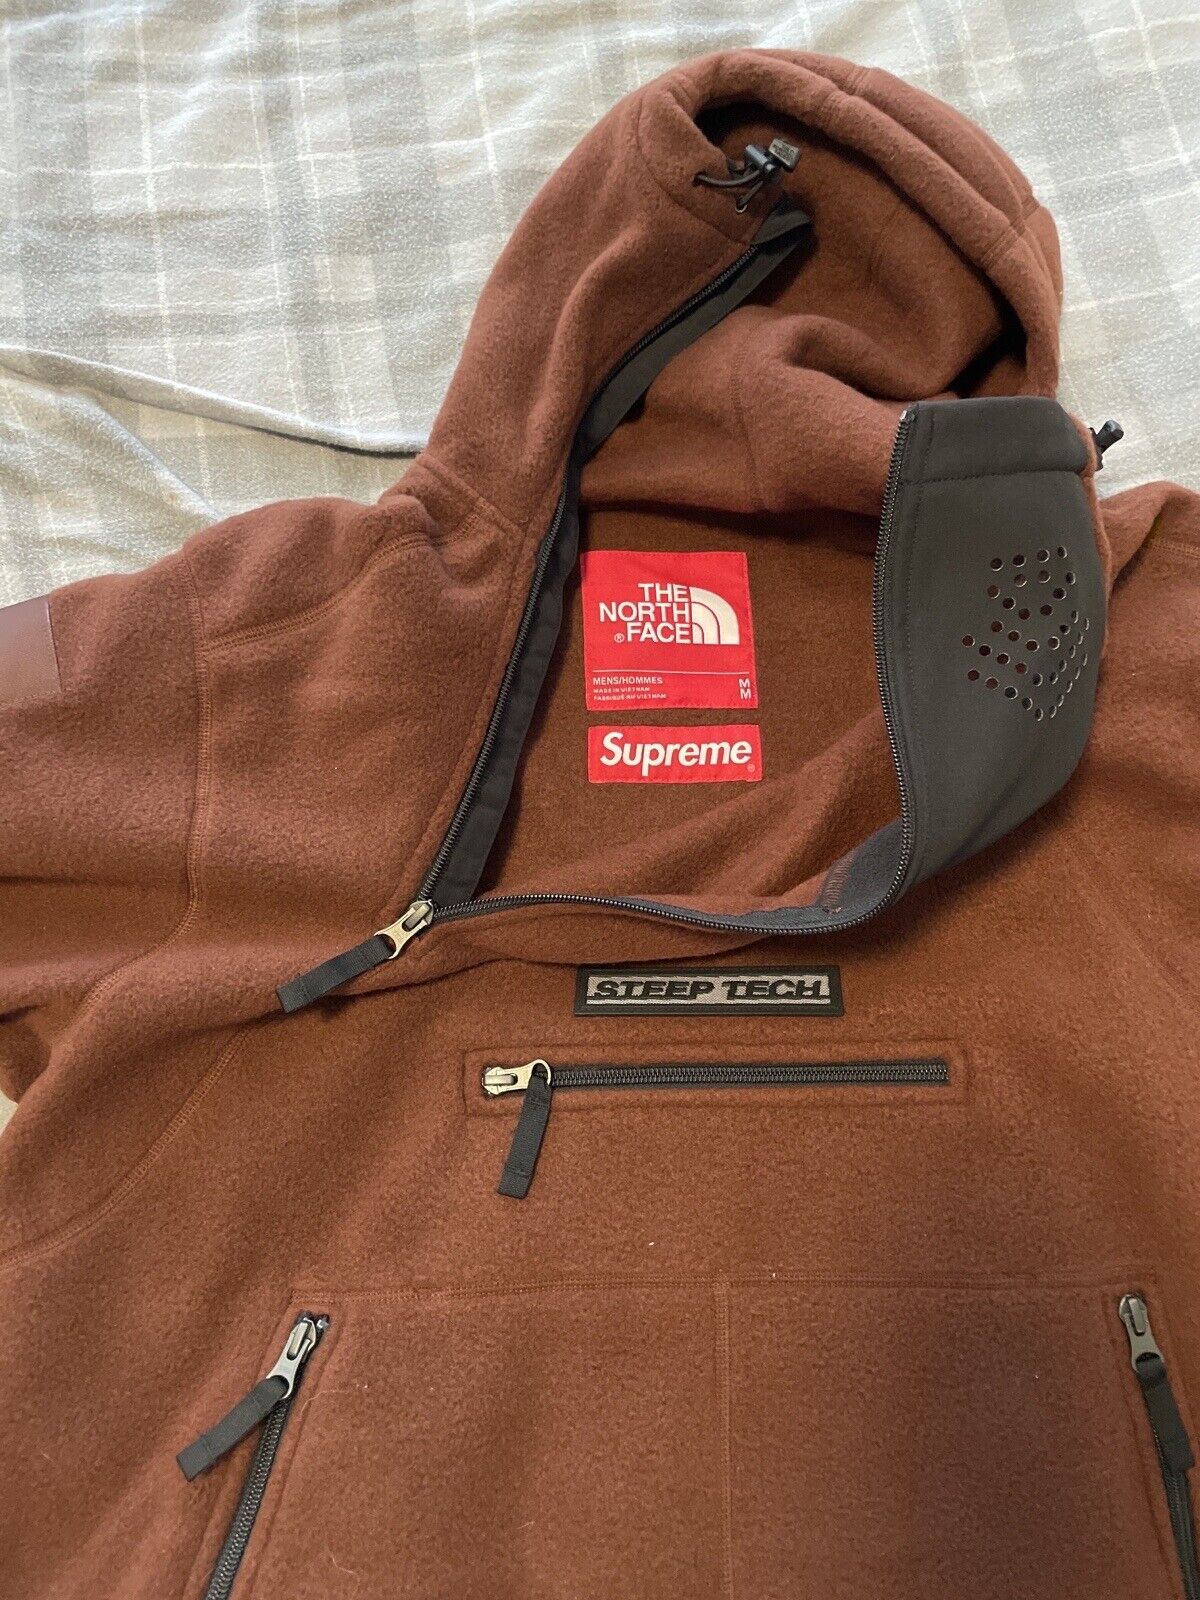 Supreme x The North Face steep tech fleece pullover brown | eBay